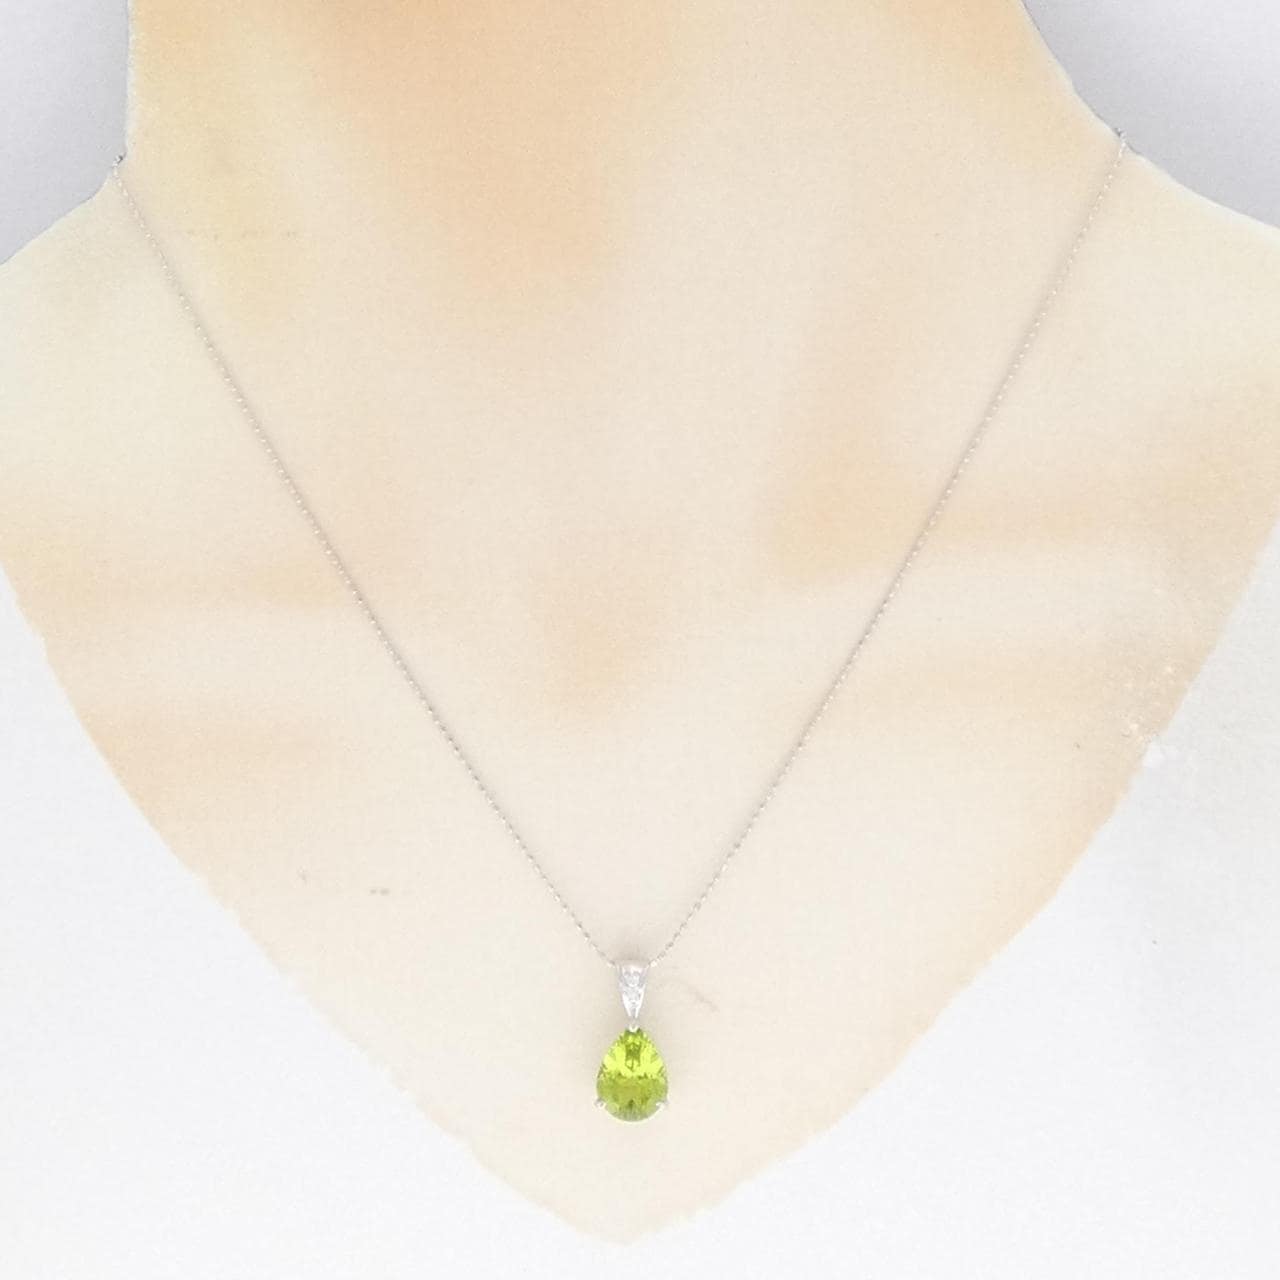 K18WG Peridot necklace 2.65CT